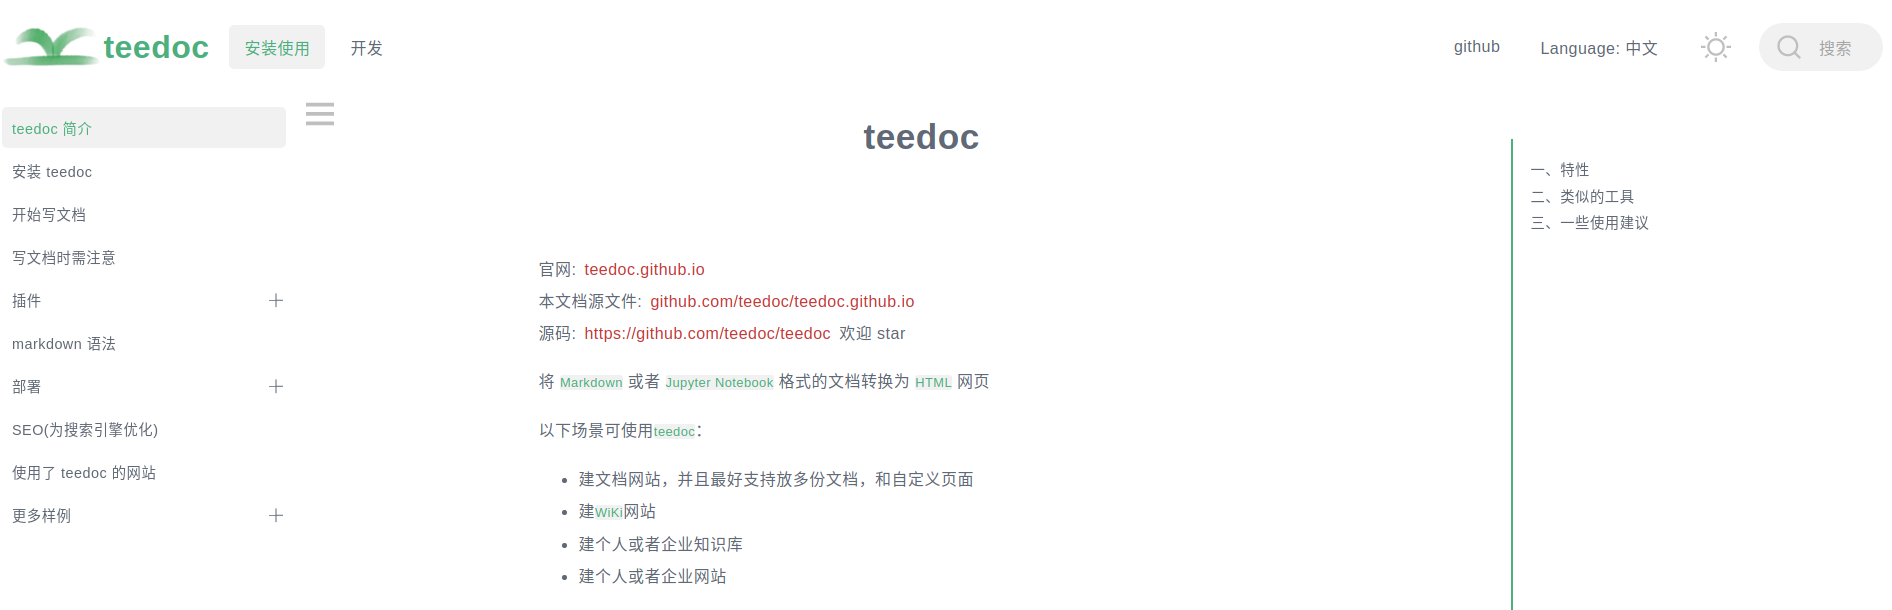 teedoc_screenshot_0.png